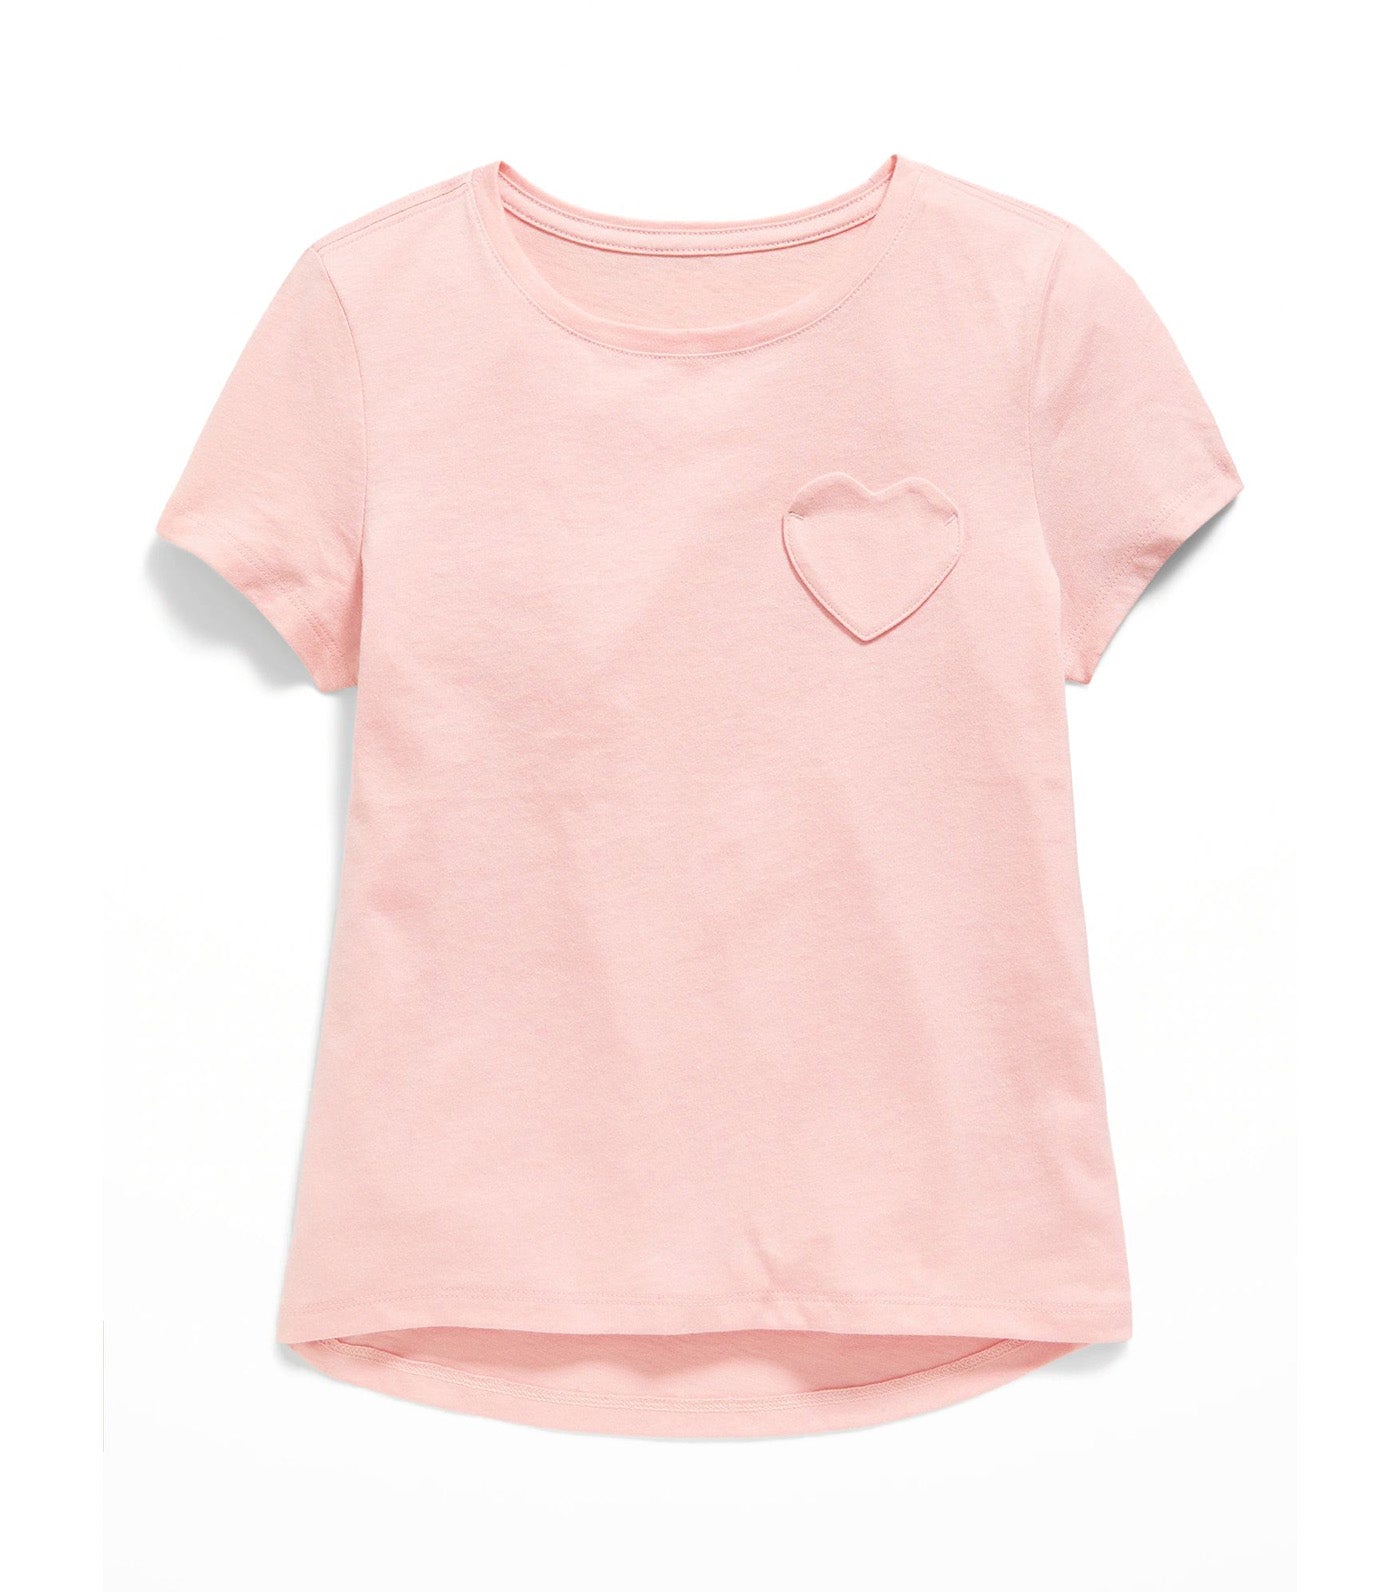 Softest Heart-Pocket T-Shirt for Girls - Blush Hue